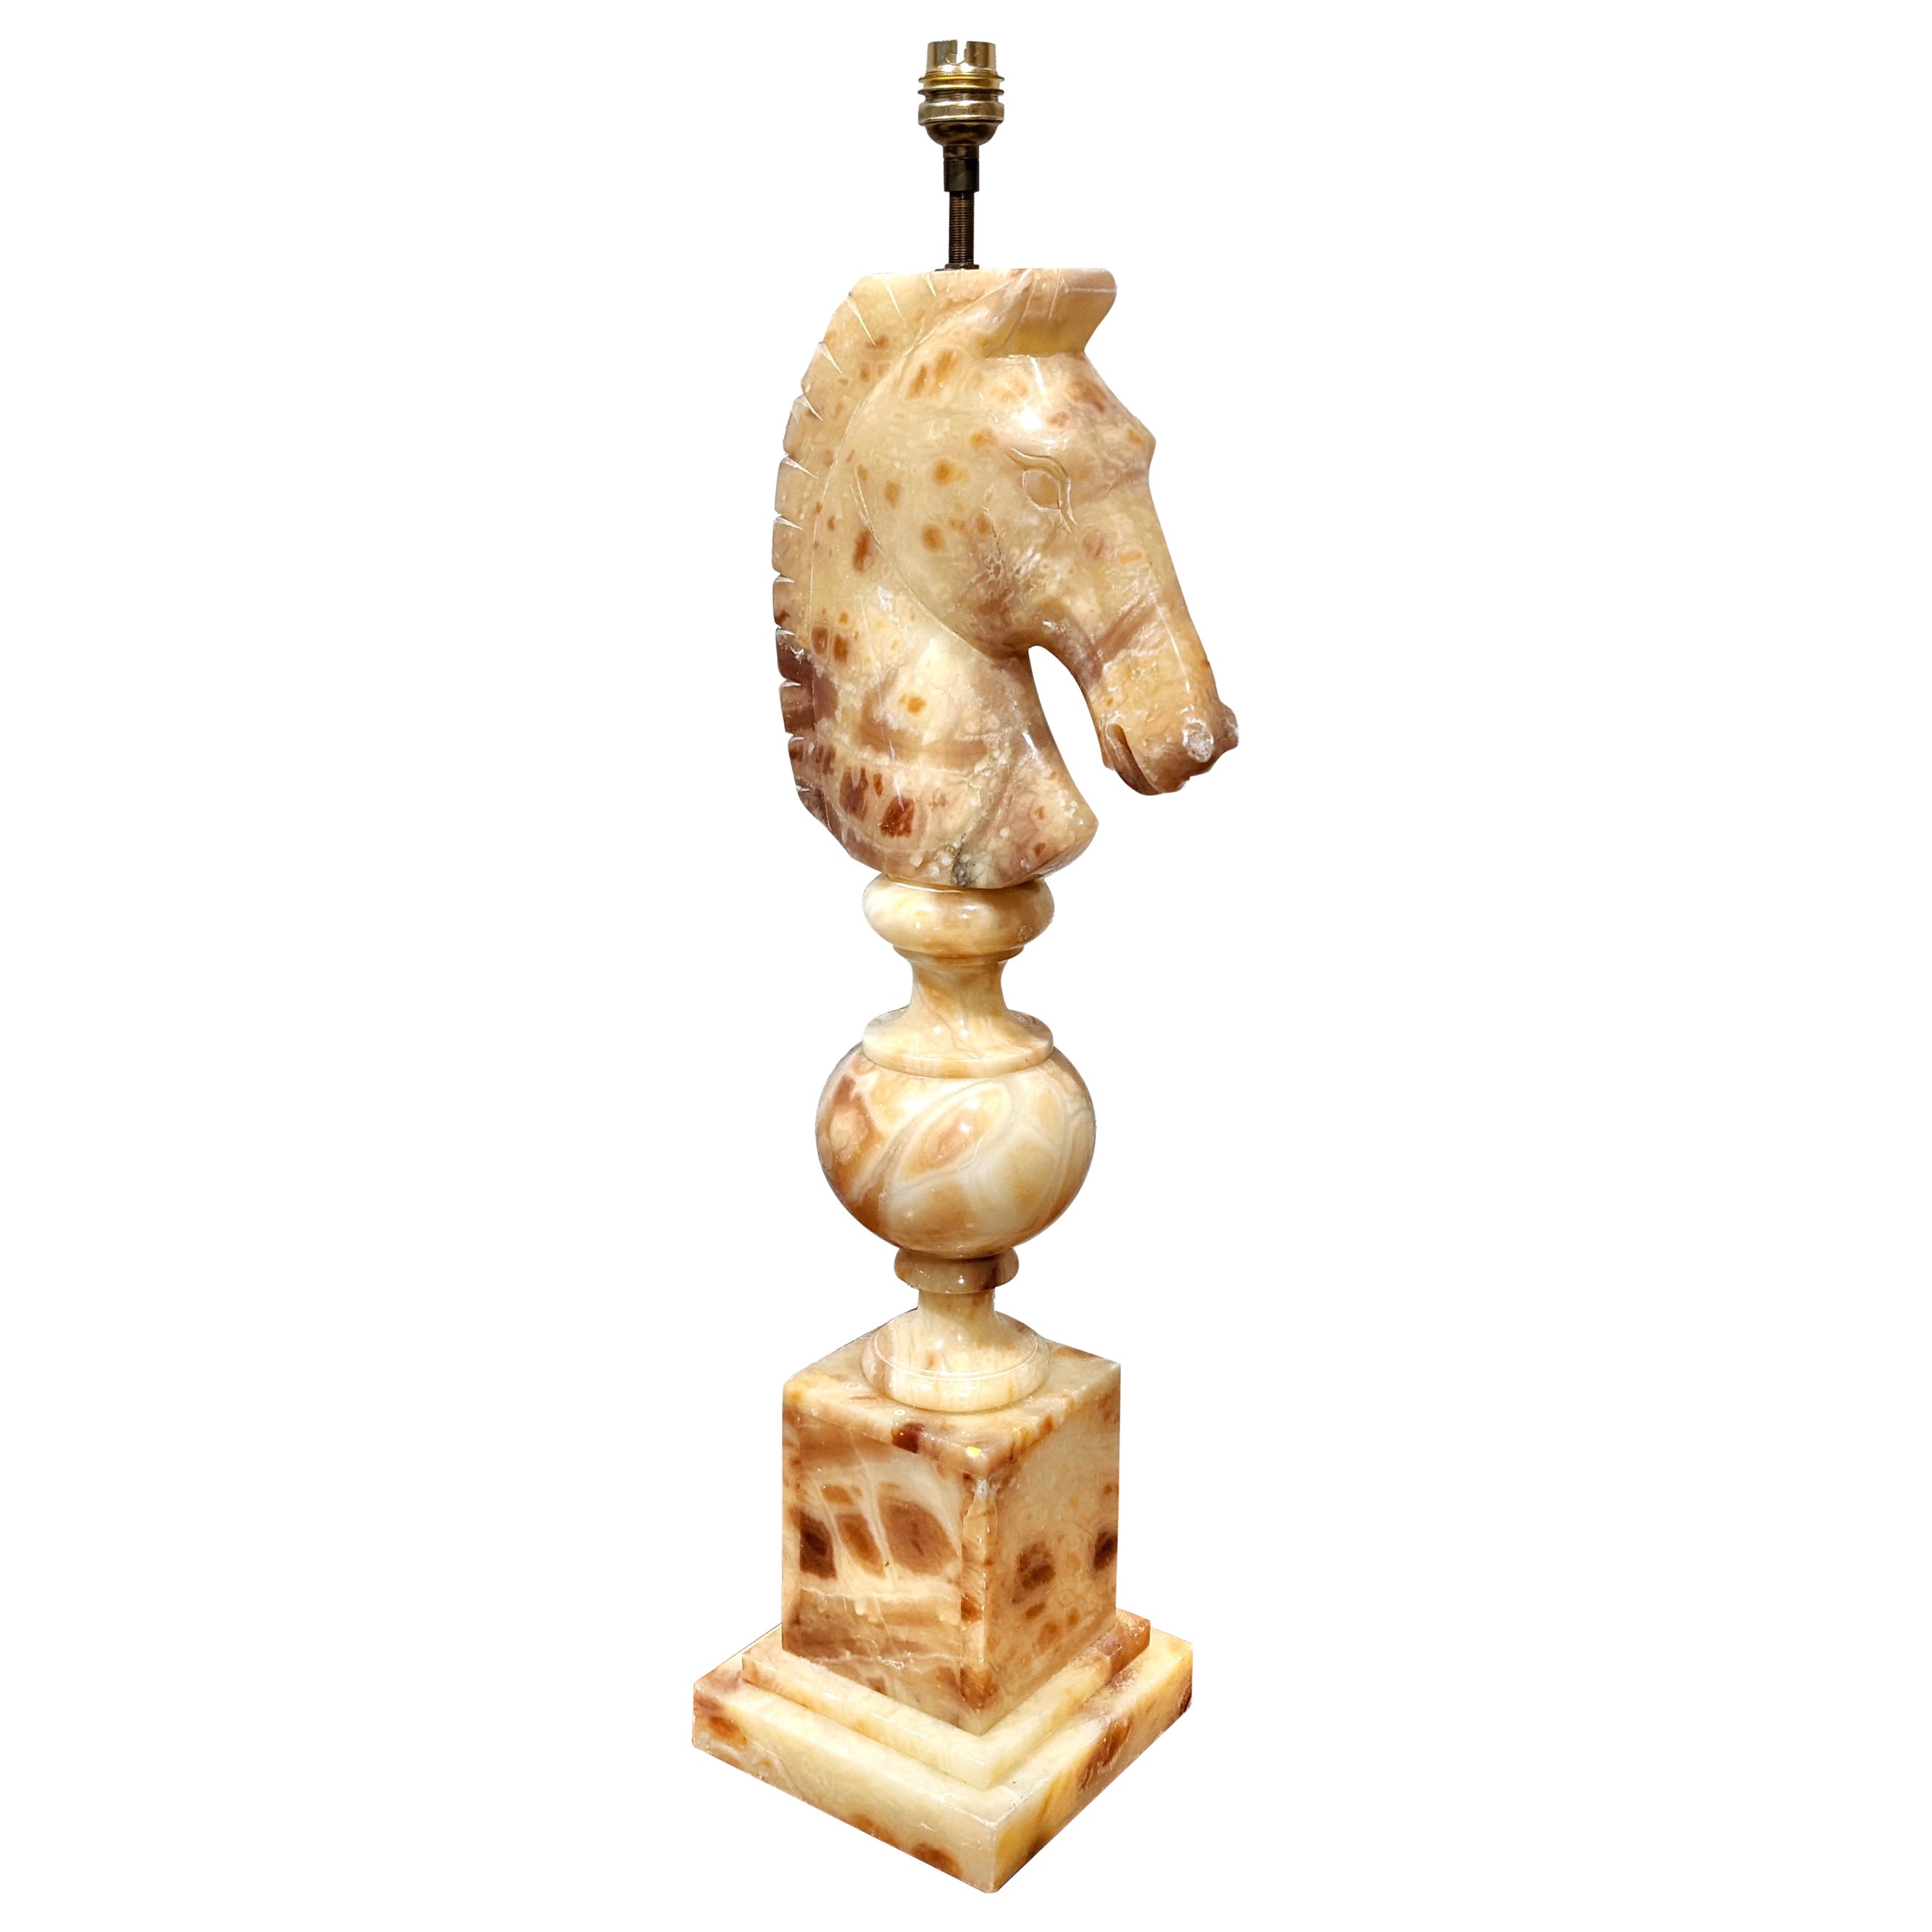 Marble "Horse Head" Lamp Base